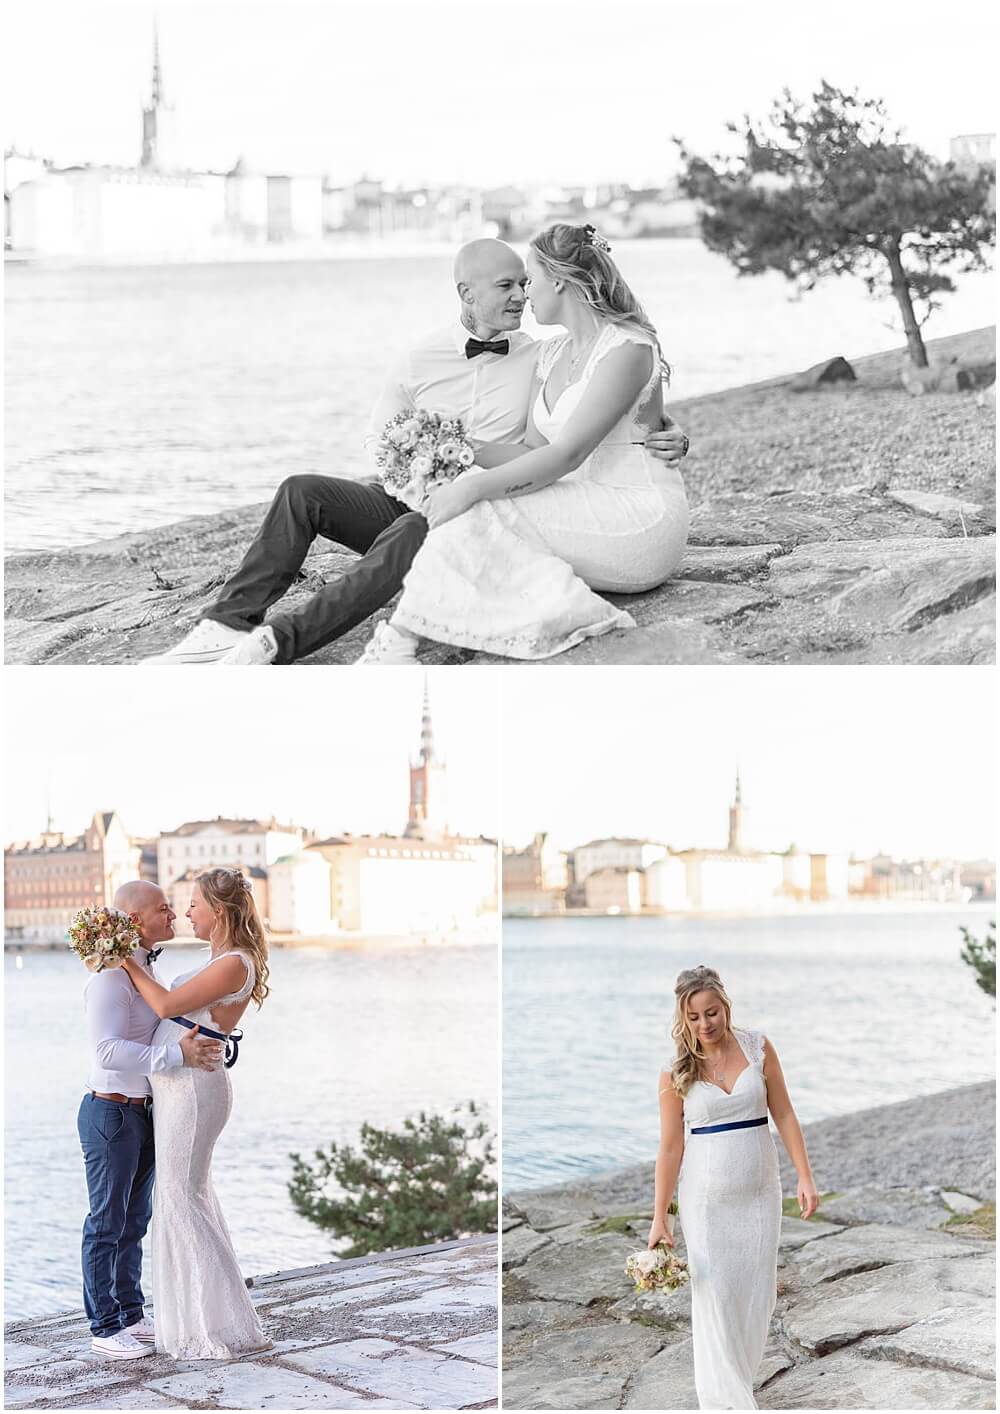 Outdoor wedding portraits Stockholm 